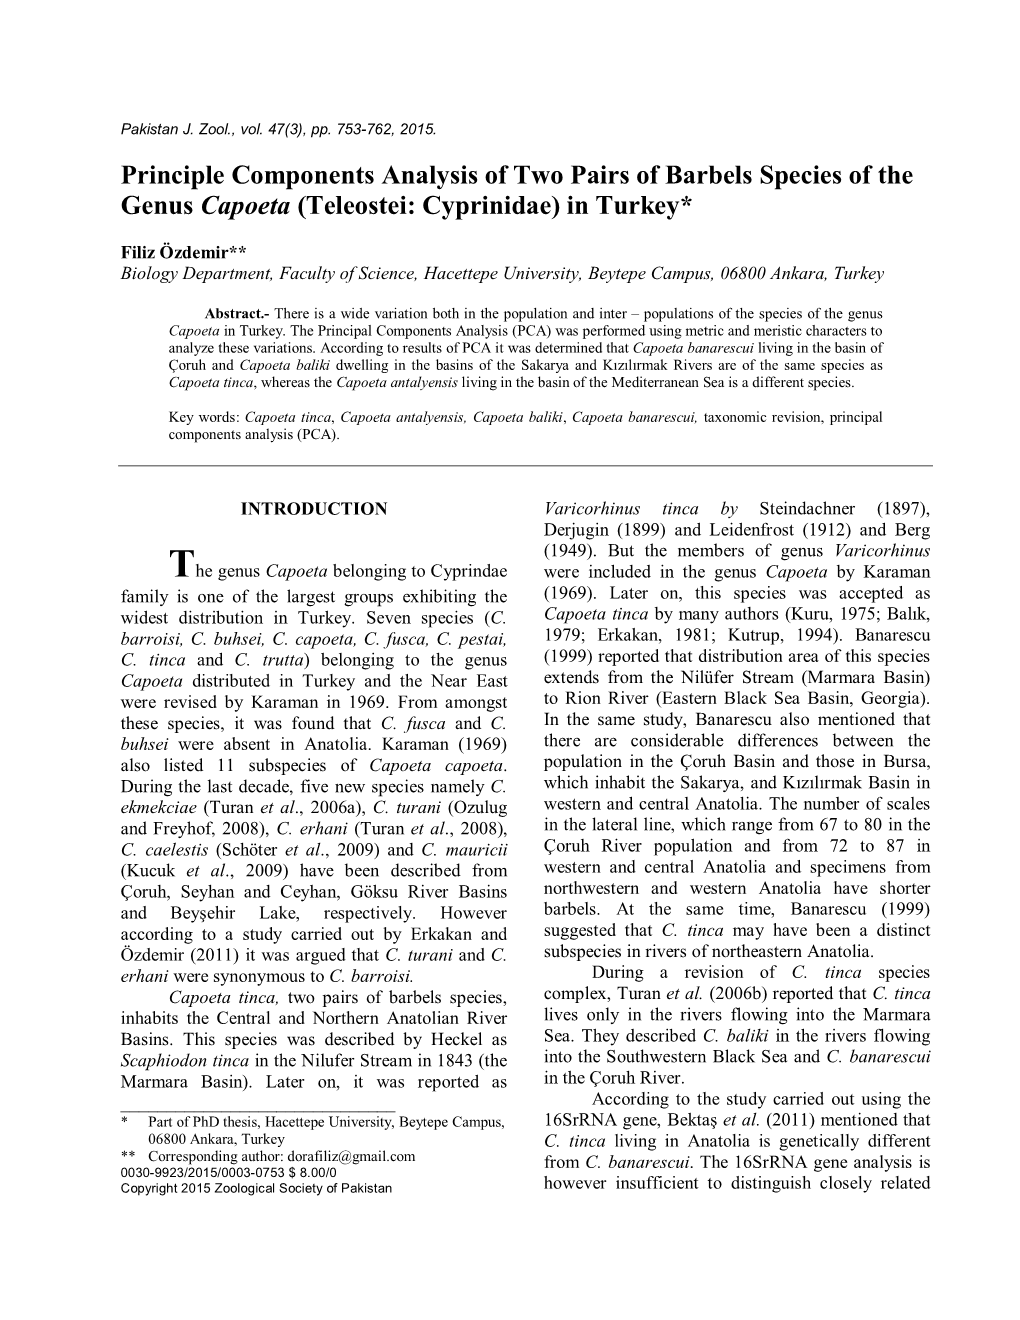 Principle Components Analysis of Two Pairs of Barbels Species of the Genus Capoeta (Teleostei: Cyprinidae) in Turkey*